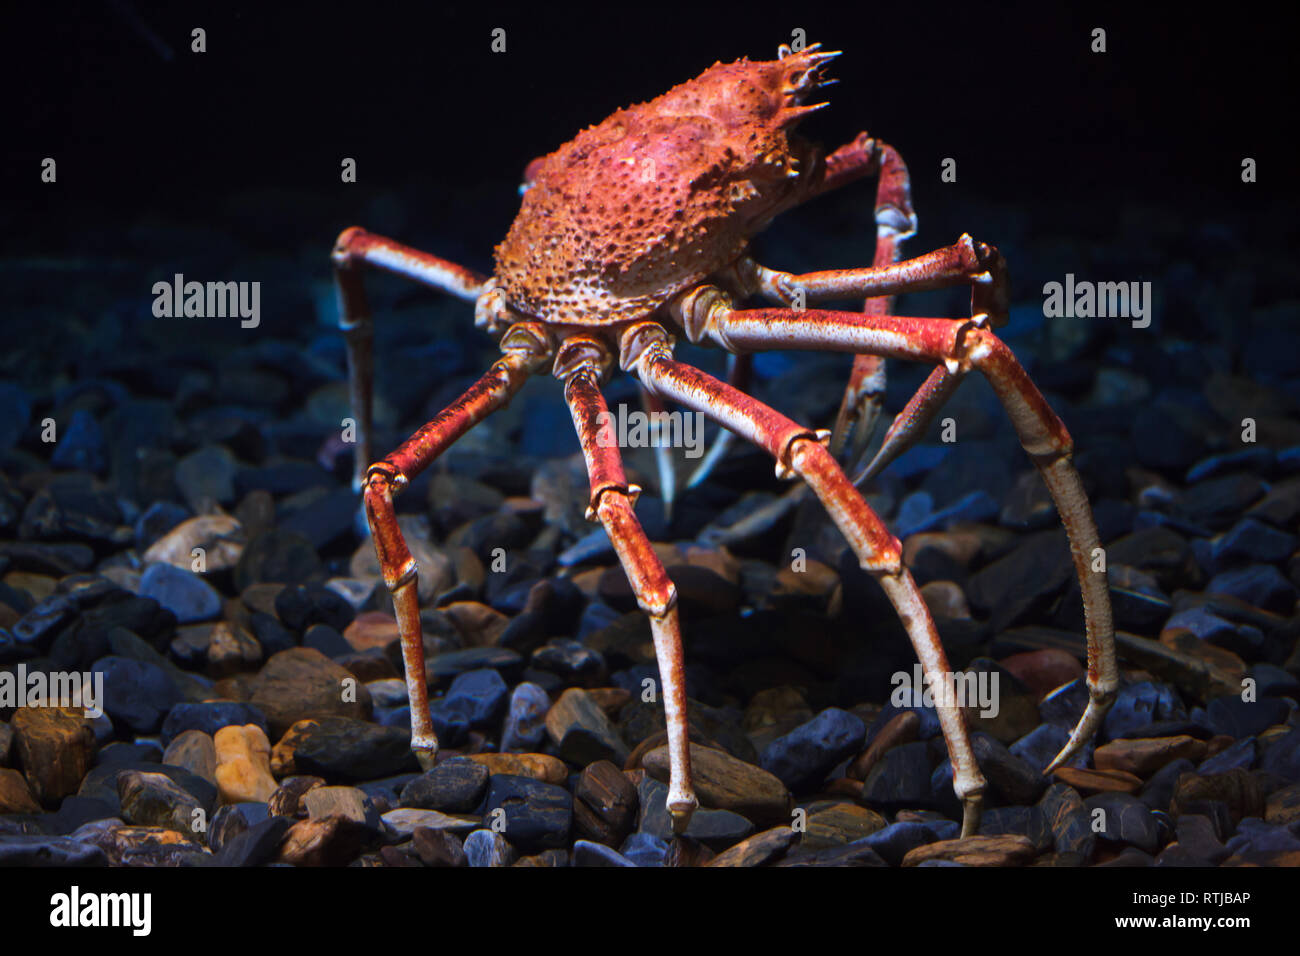 Japanese Spider Crab Macrocheira Kaempferi Also Known As The Giant Spider Crab Stock Photo Alamy